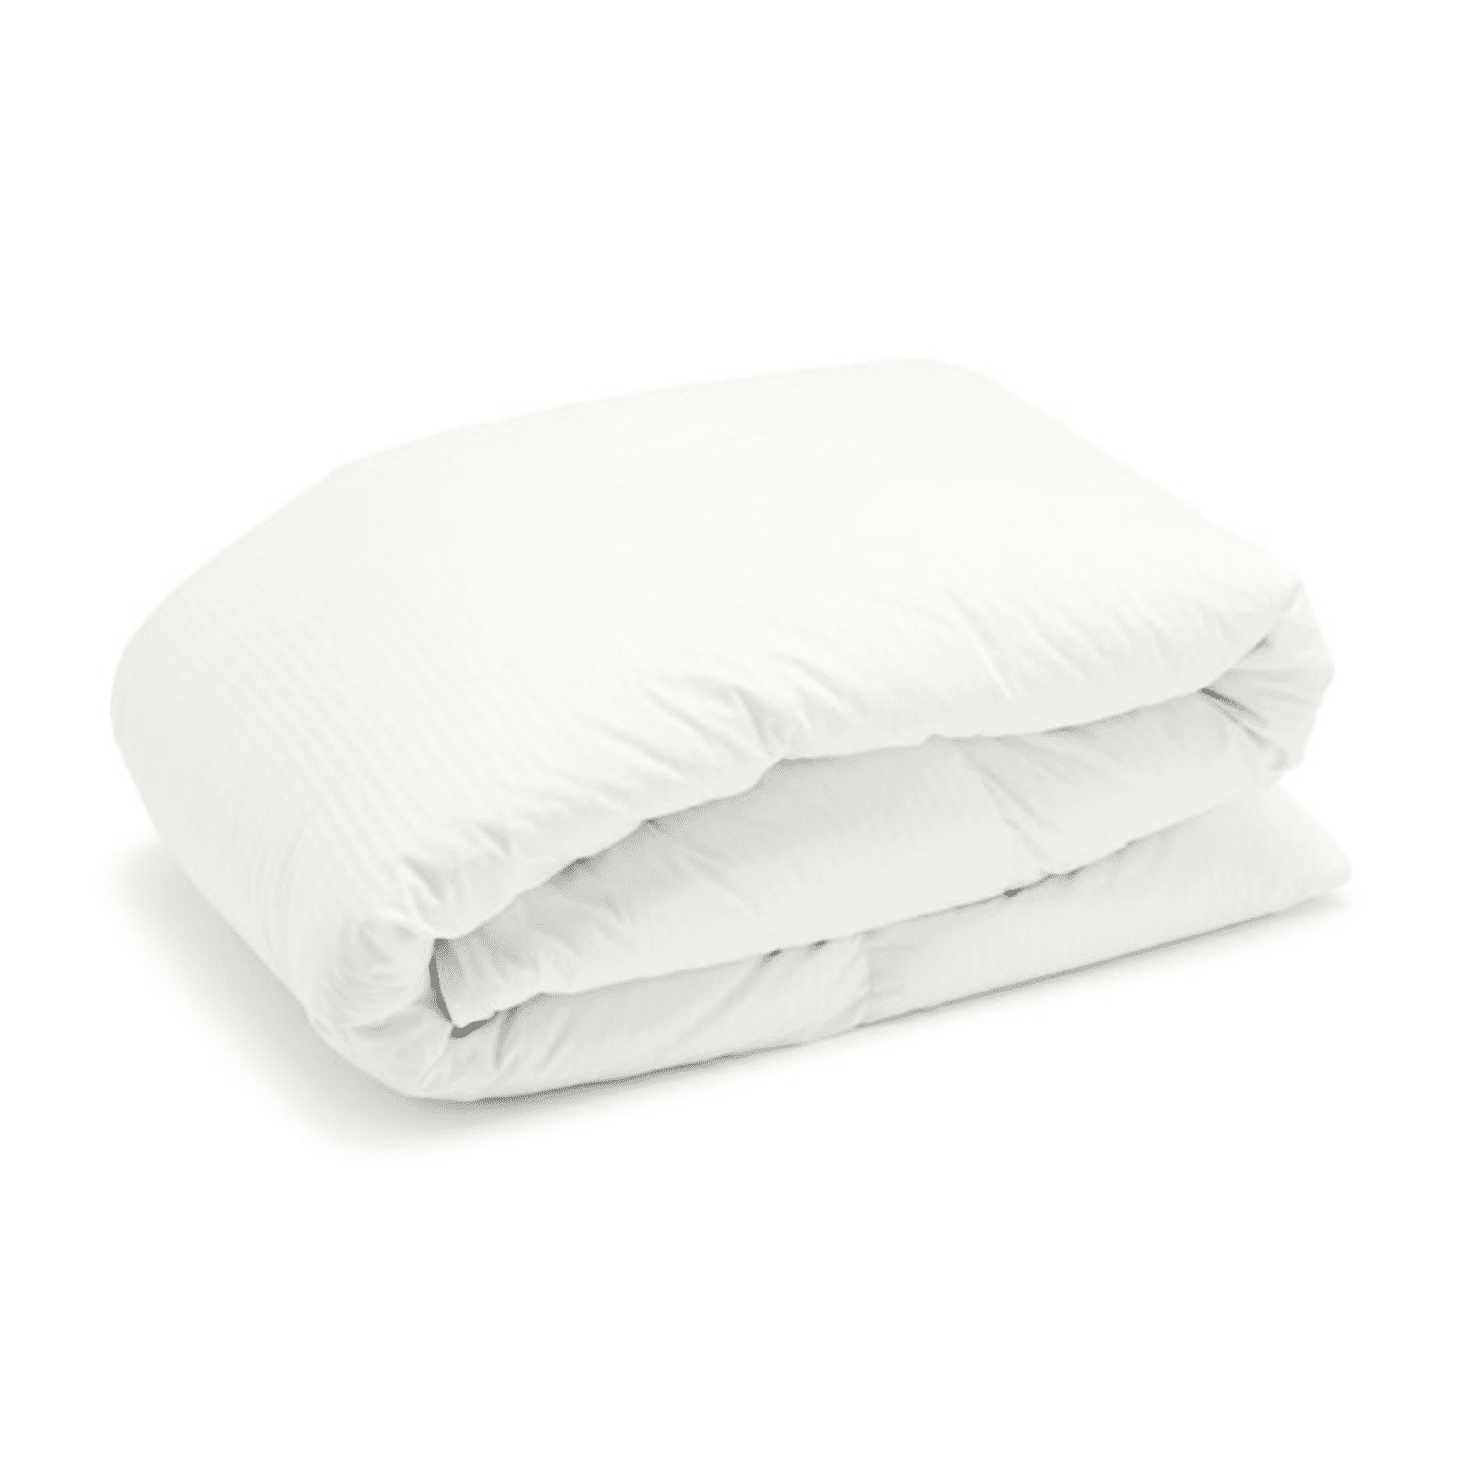 The Best Comforters 2020 Lightweight Down Alternative Down